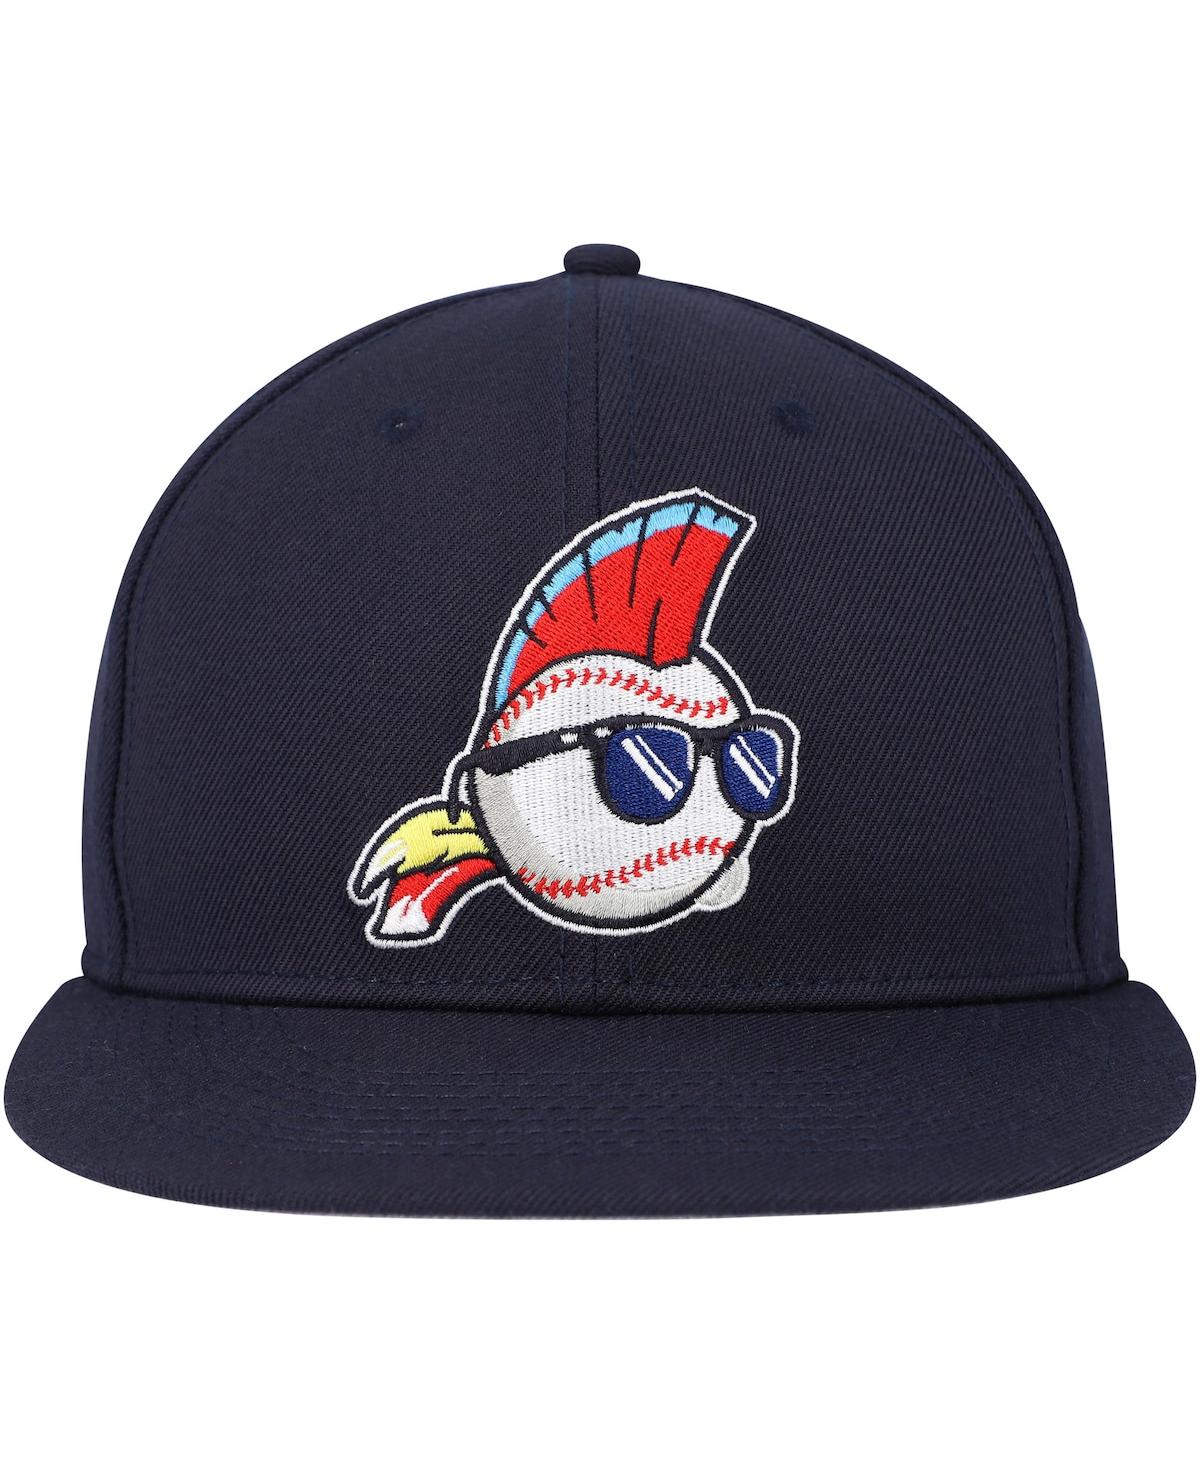 Shop Baseballism Men's  Navy Major League Snapback Hat